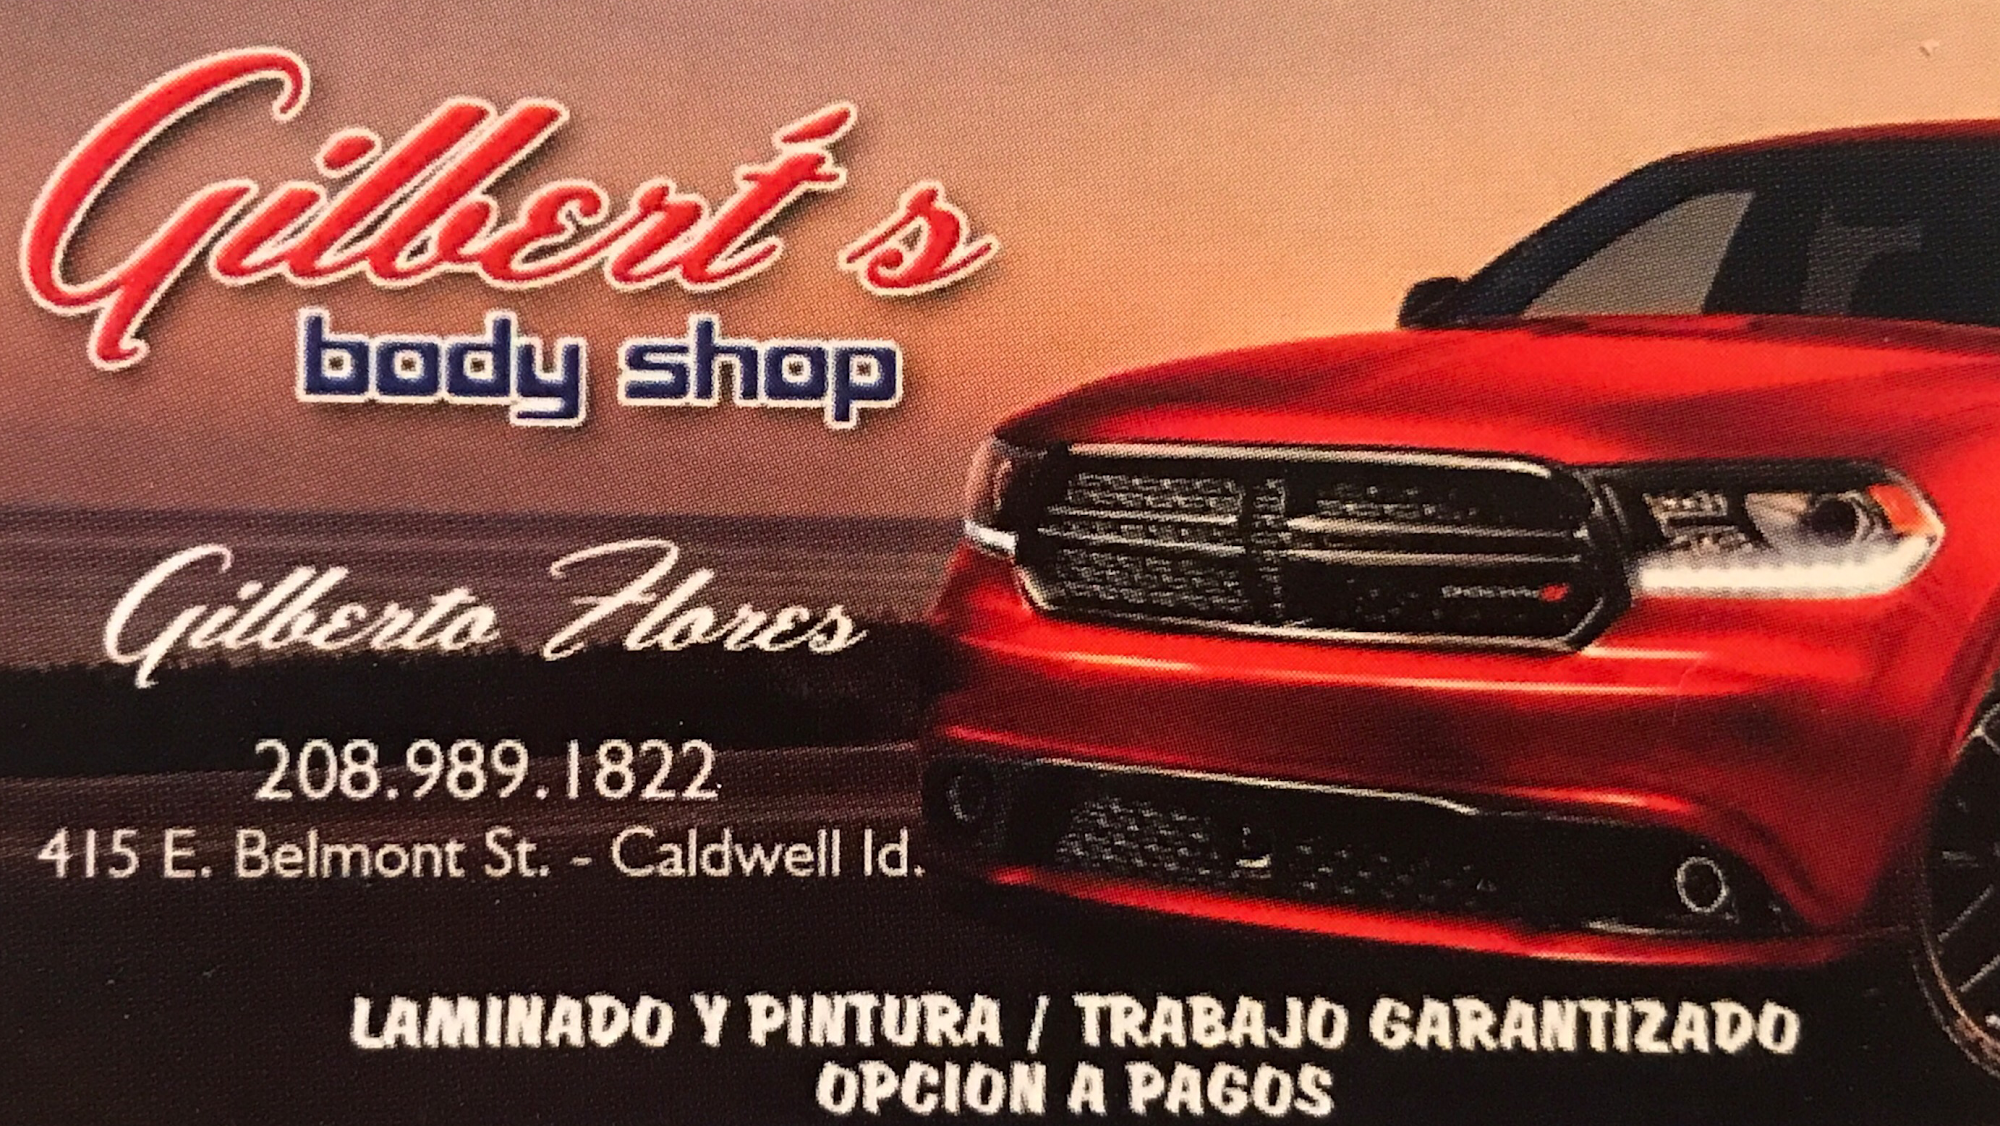 Gilberto’s Body Shop